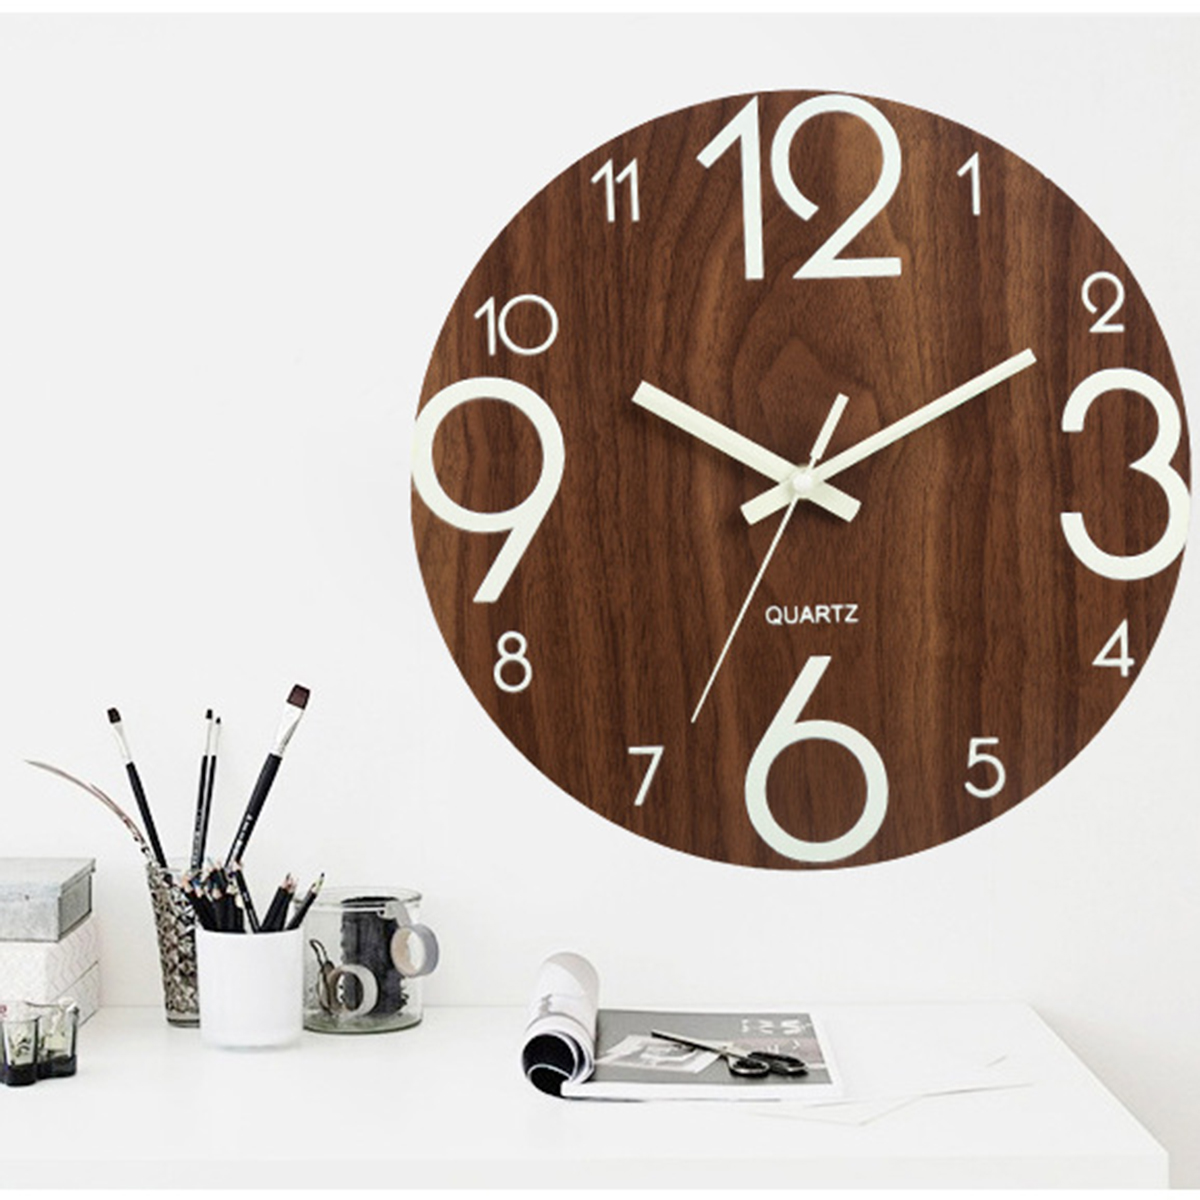 12quot-Luminous-Wall-Clock-Quartz-Wooden-Silent-Non-Ticking-Dark-Home-Room-Decor-1496359-9